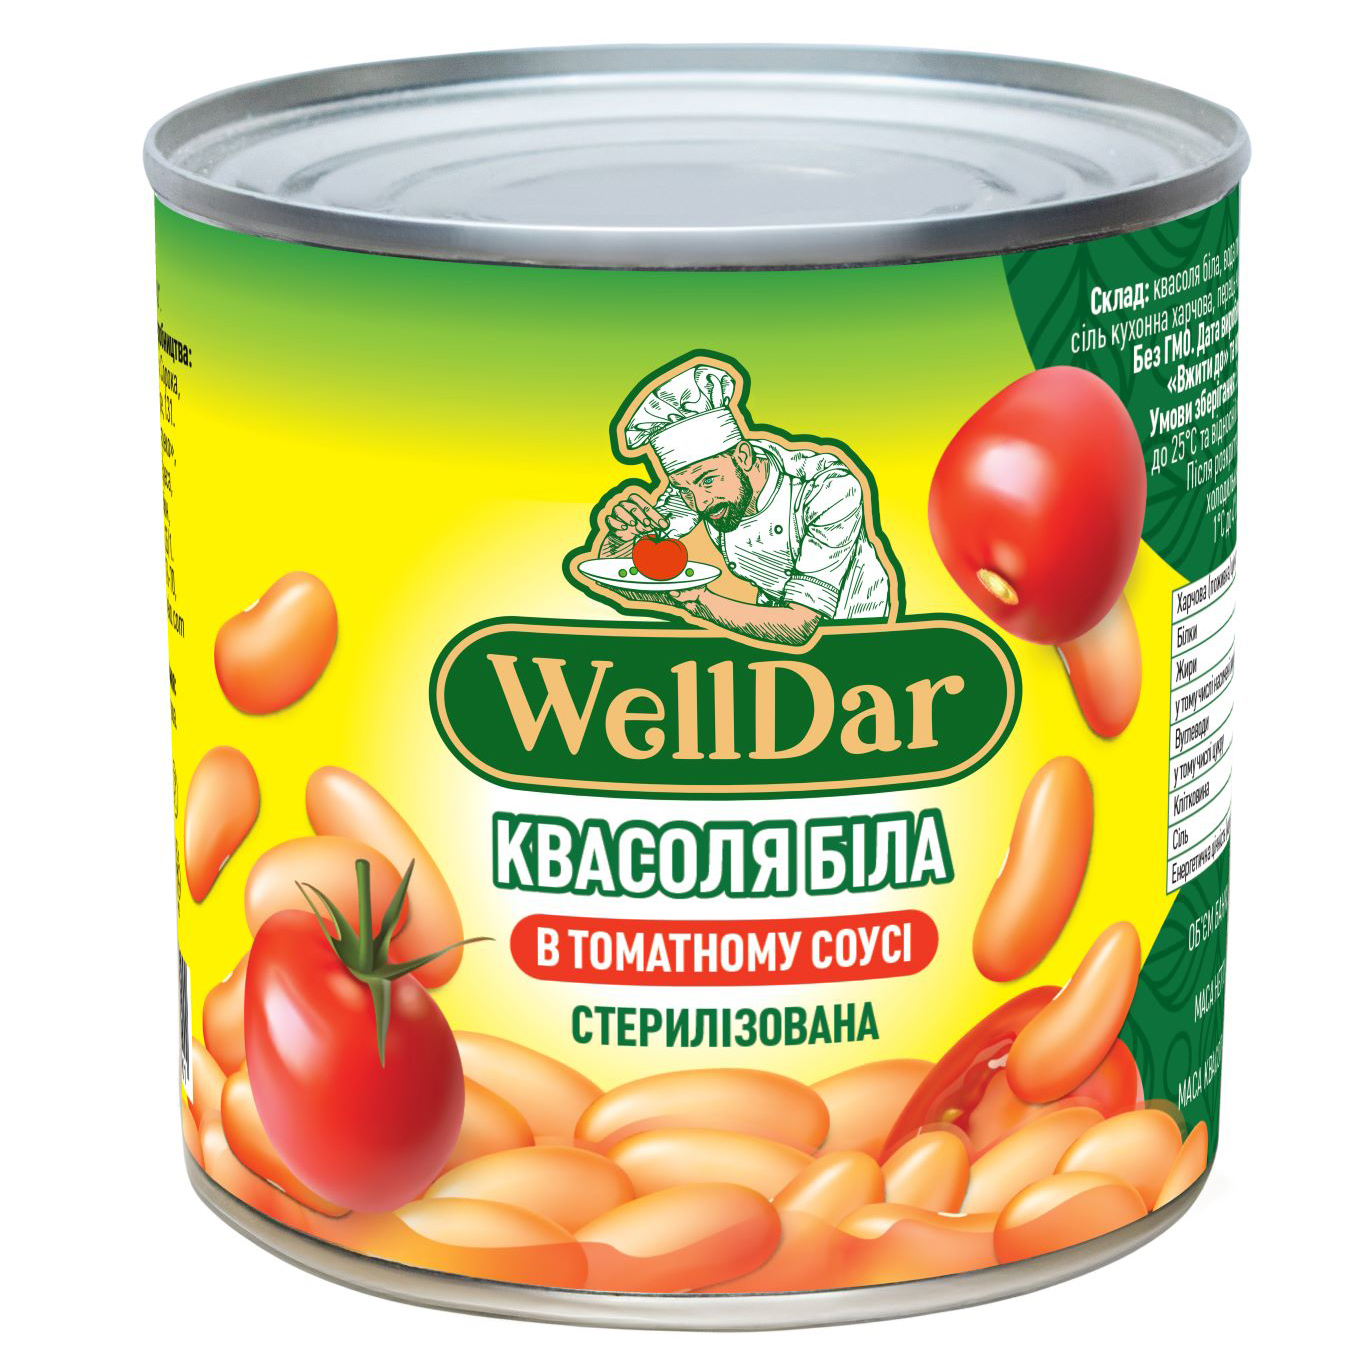 WellDar white beans in tomato sauce sterilized 410g